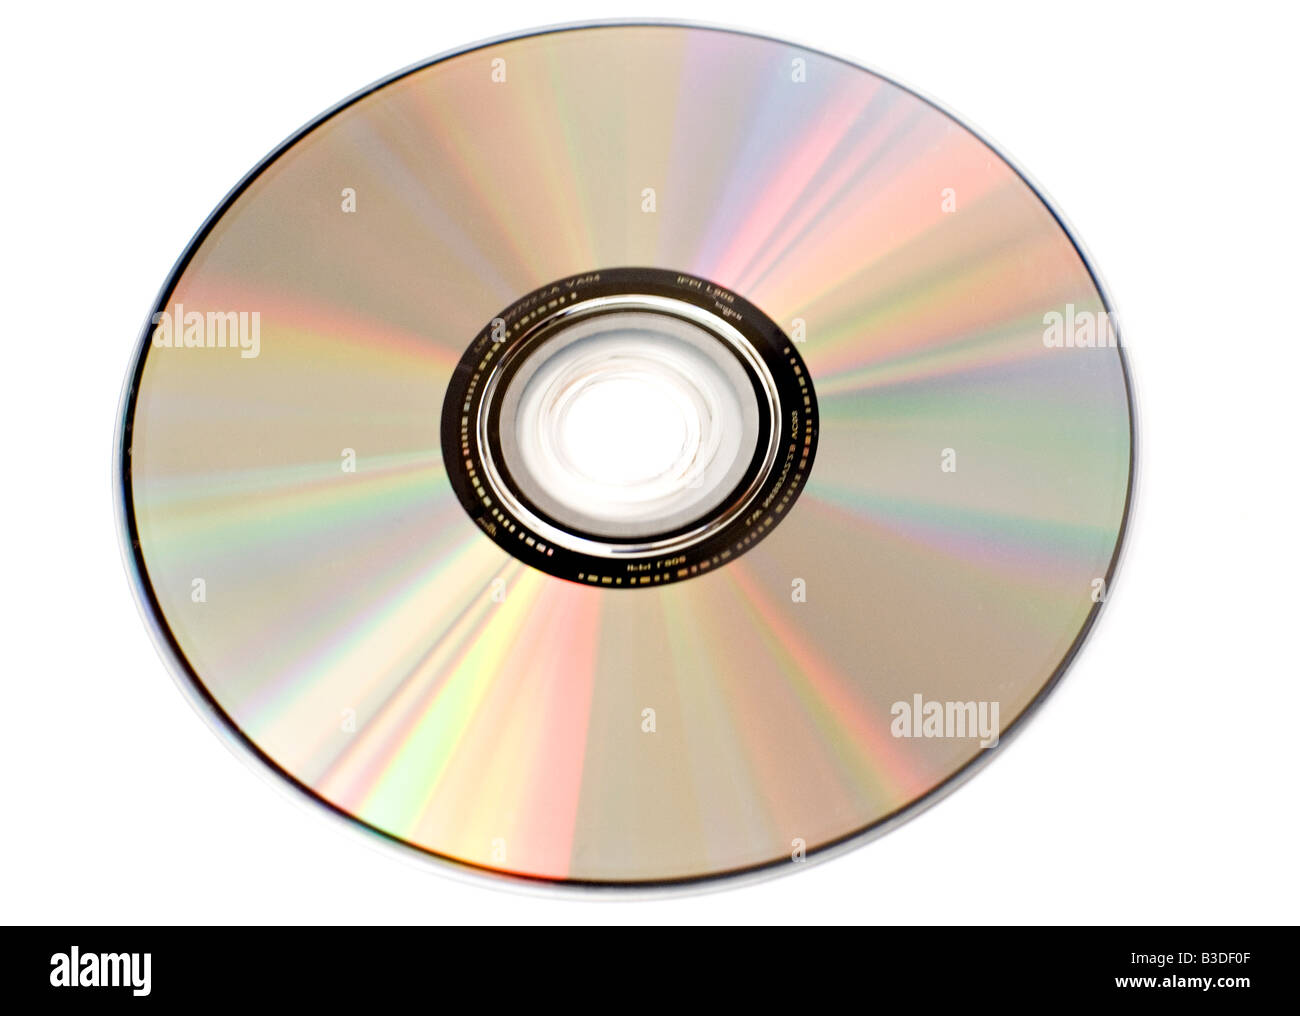 CD DVD for storage Stock Photo